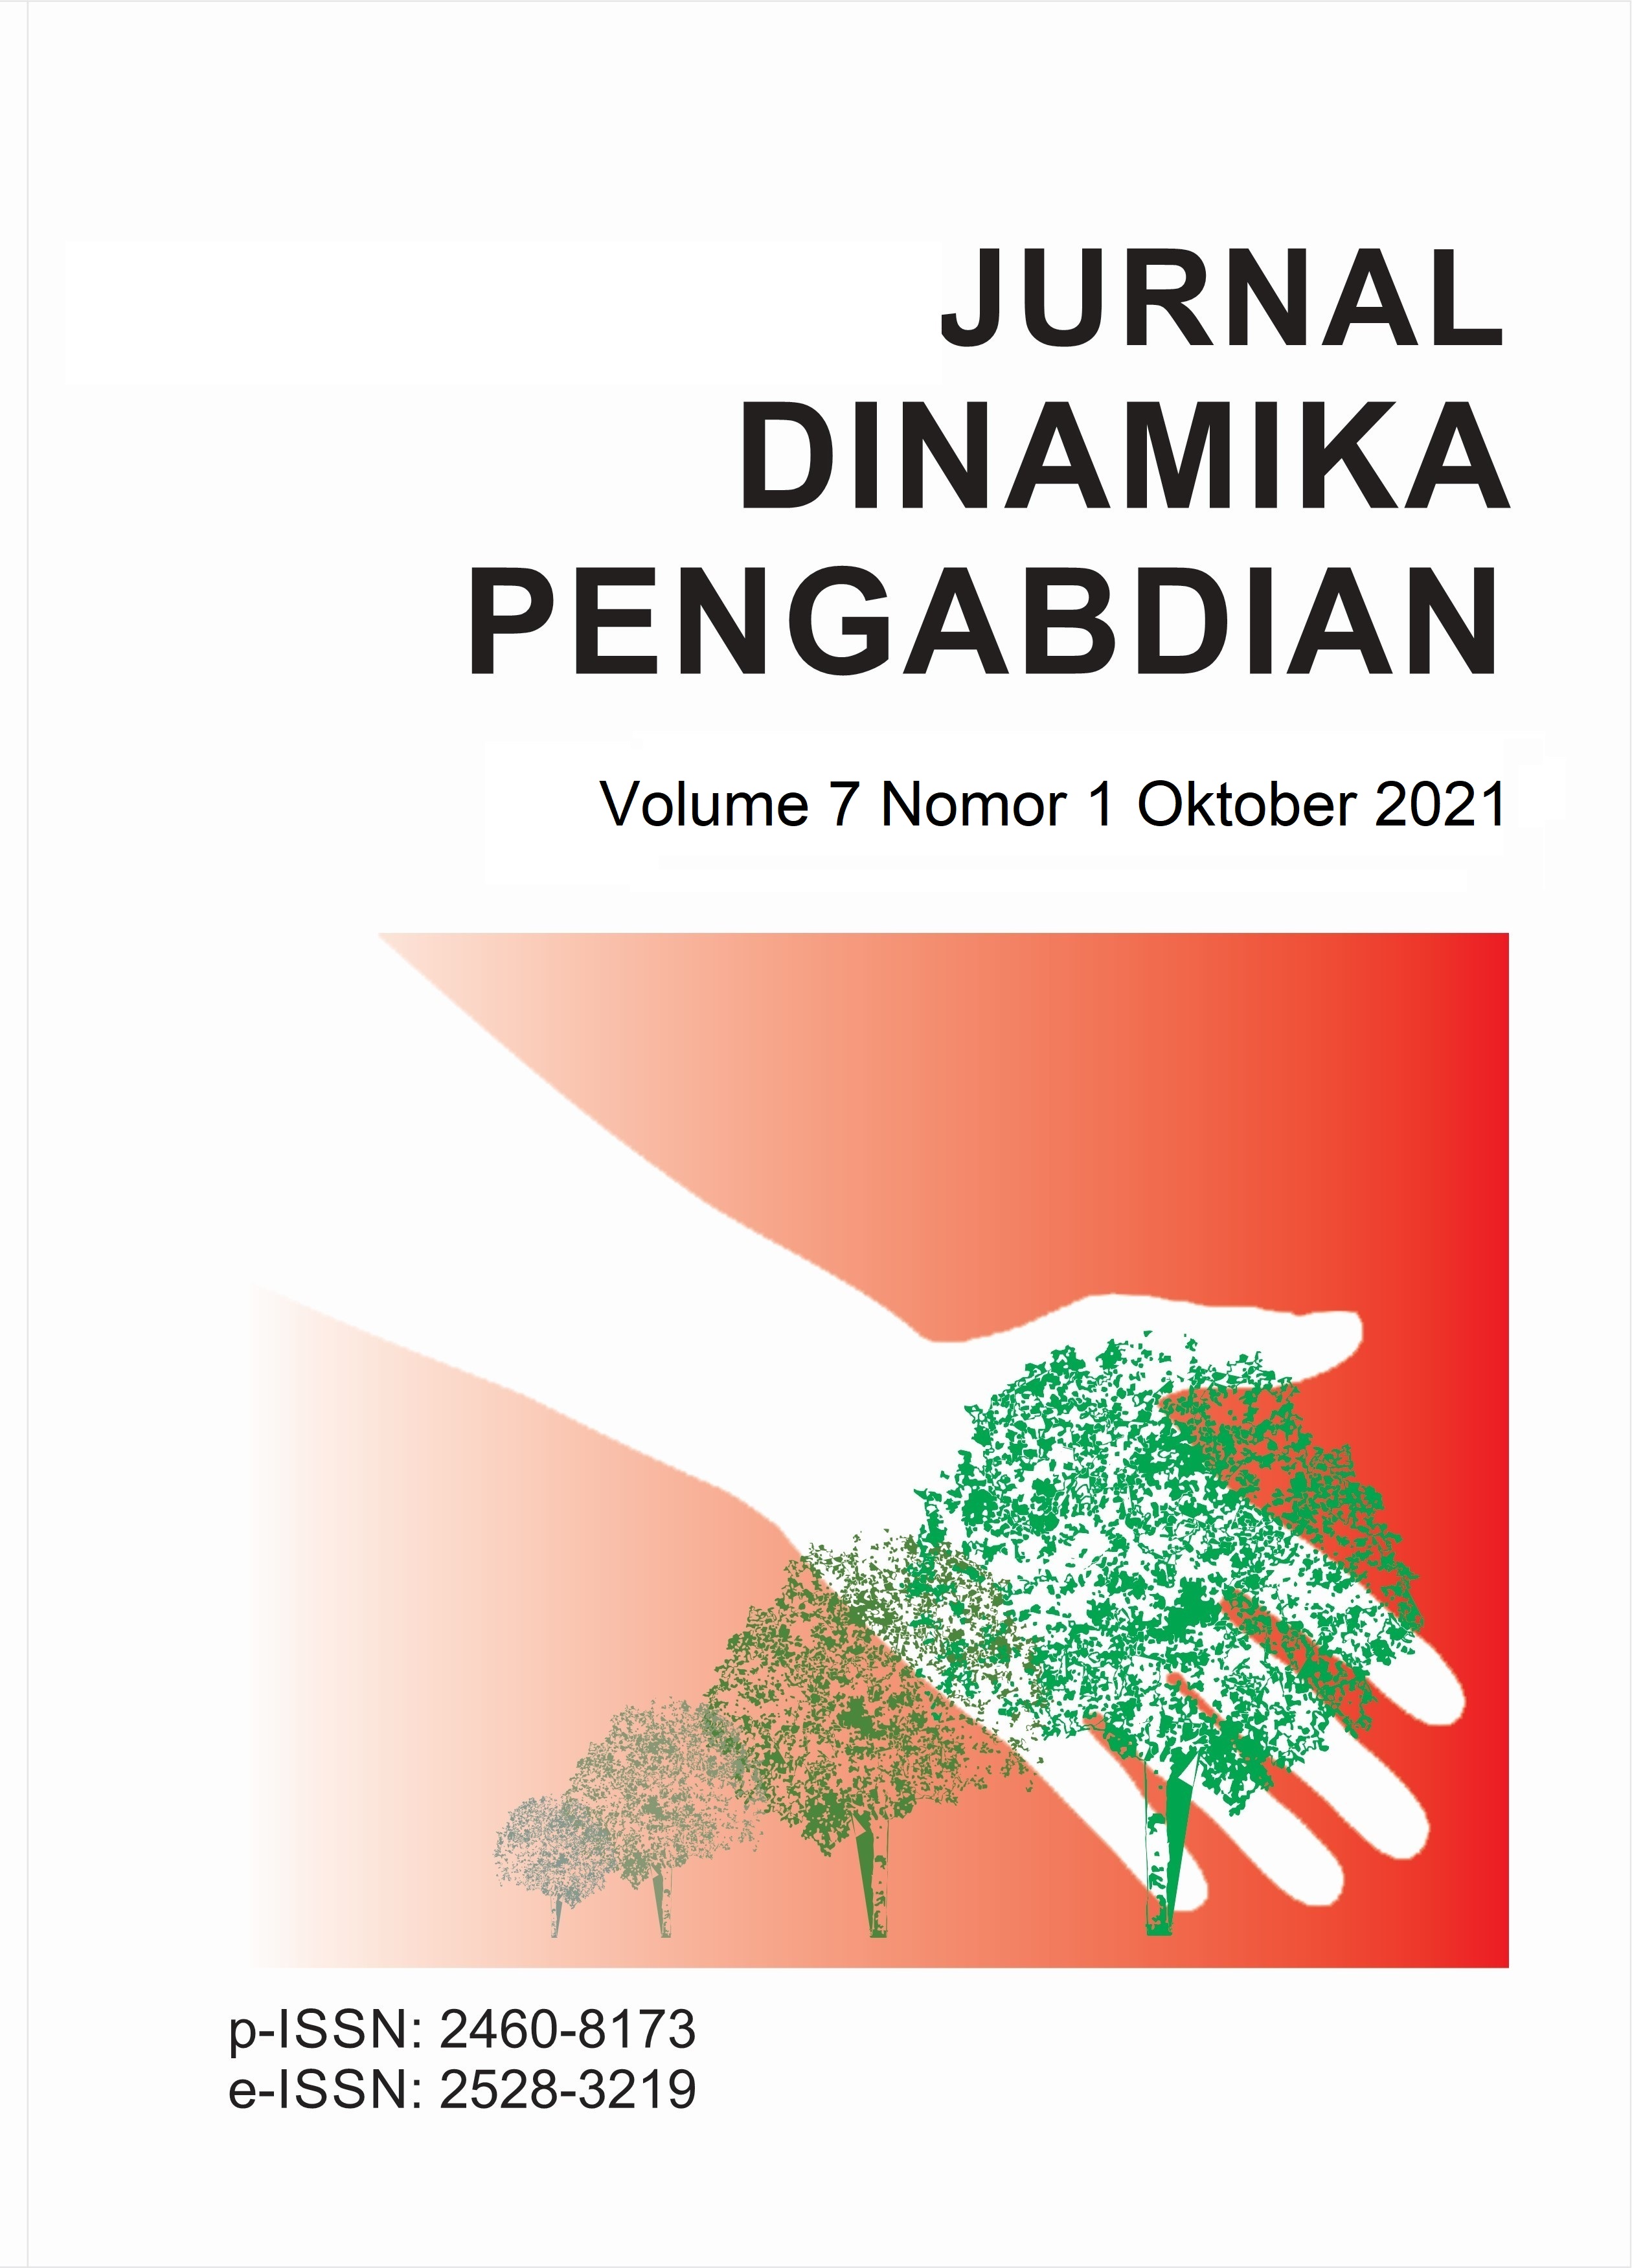 					View Vol. 7 No. 1 (2021): JURNAL DINAMIKA PENGABDIAN VOL. 7 NO. 1 OKTOBER 2021
				